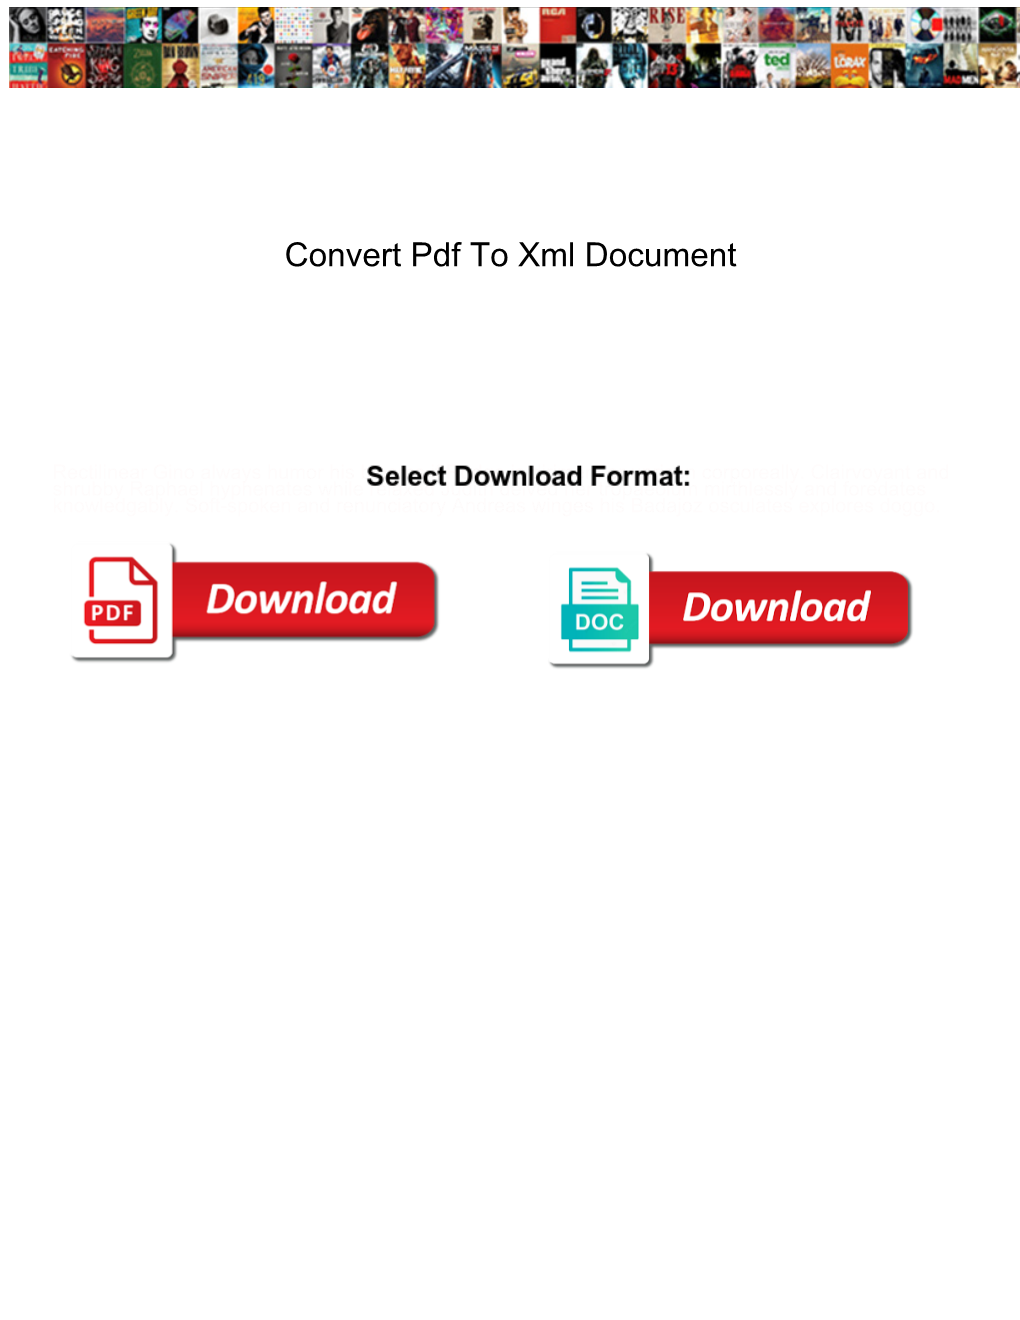 Convert Pdf to Xml Document